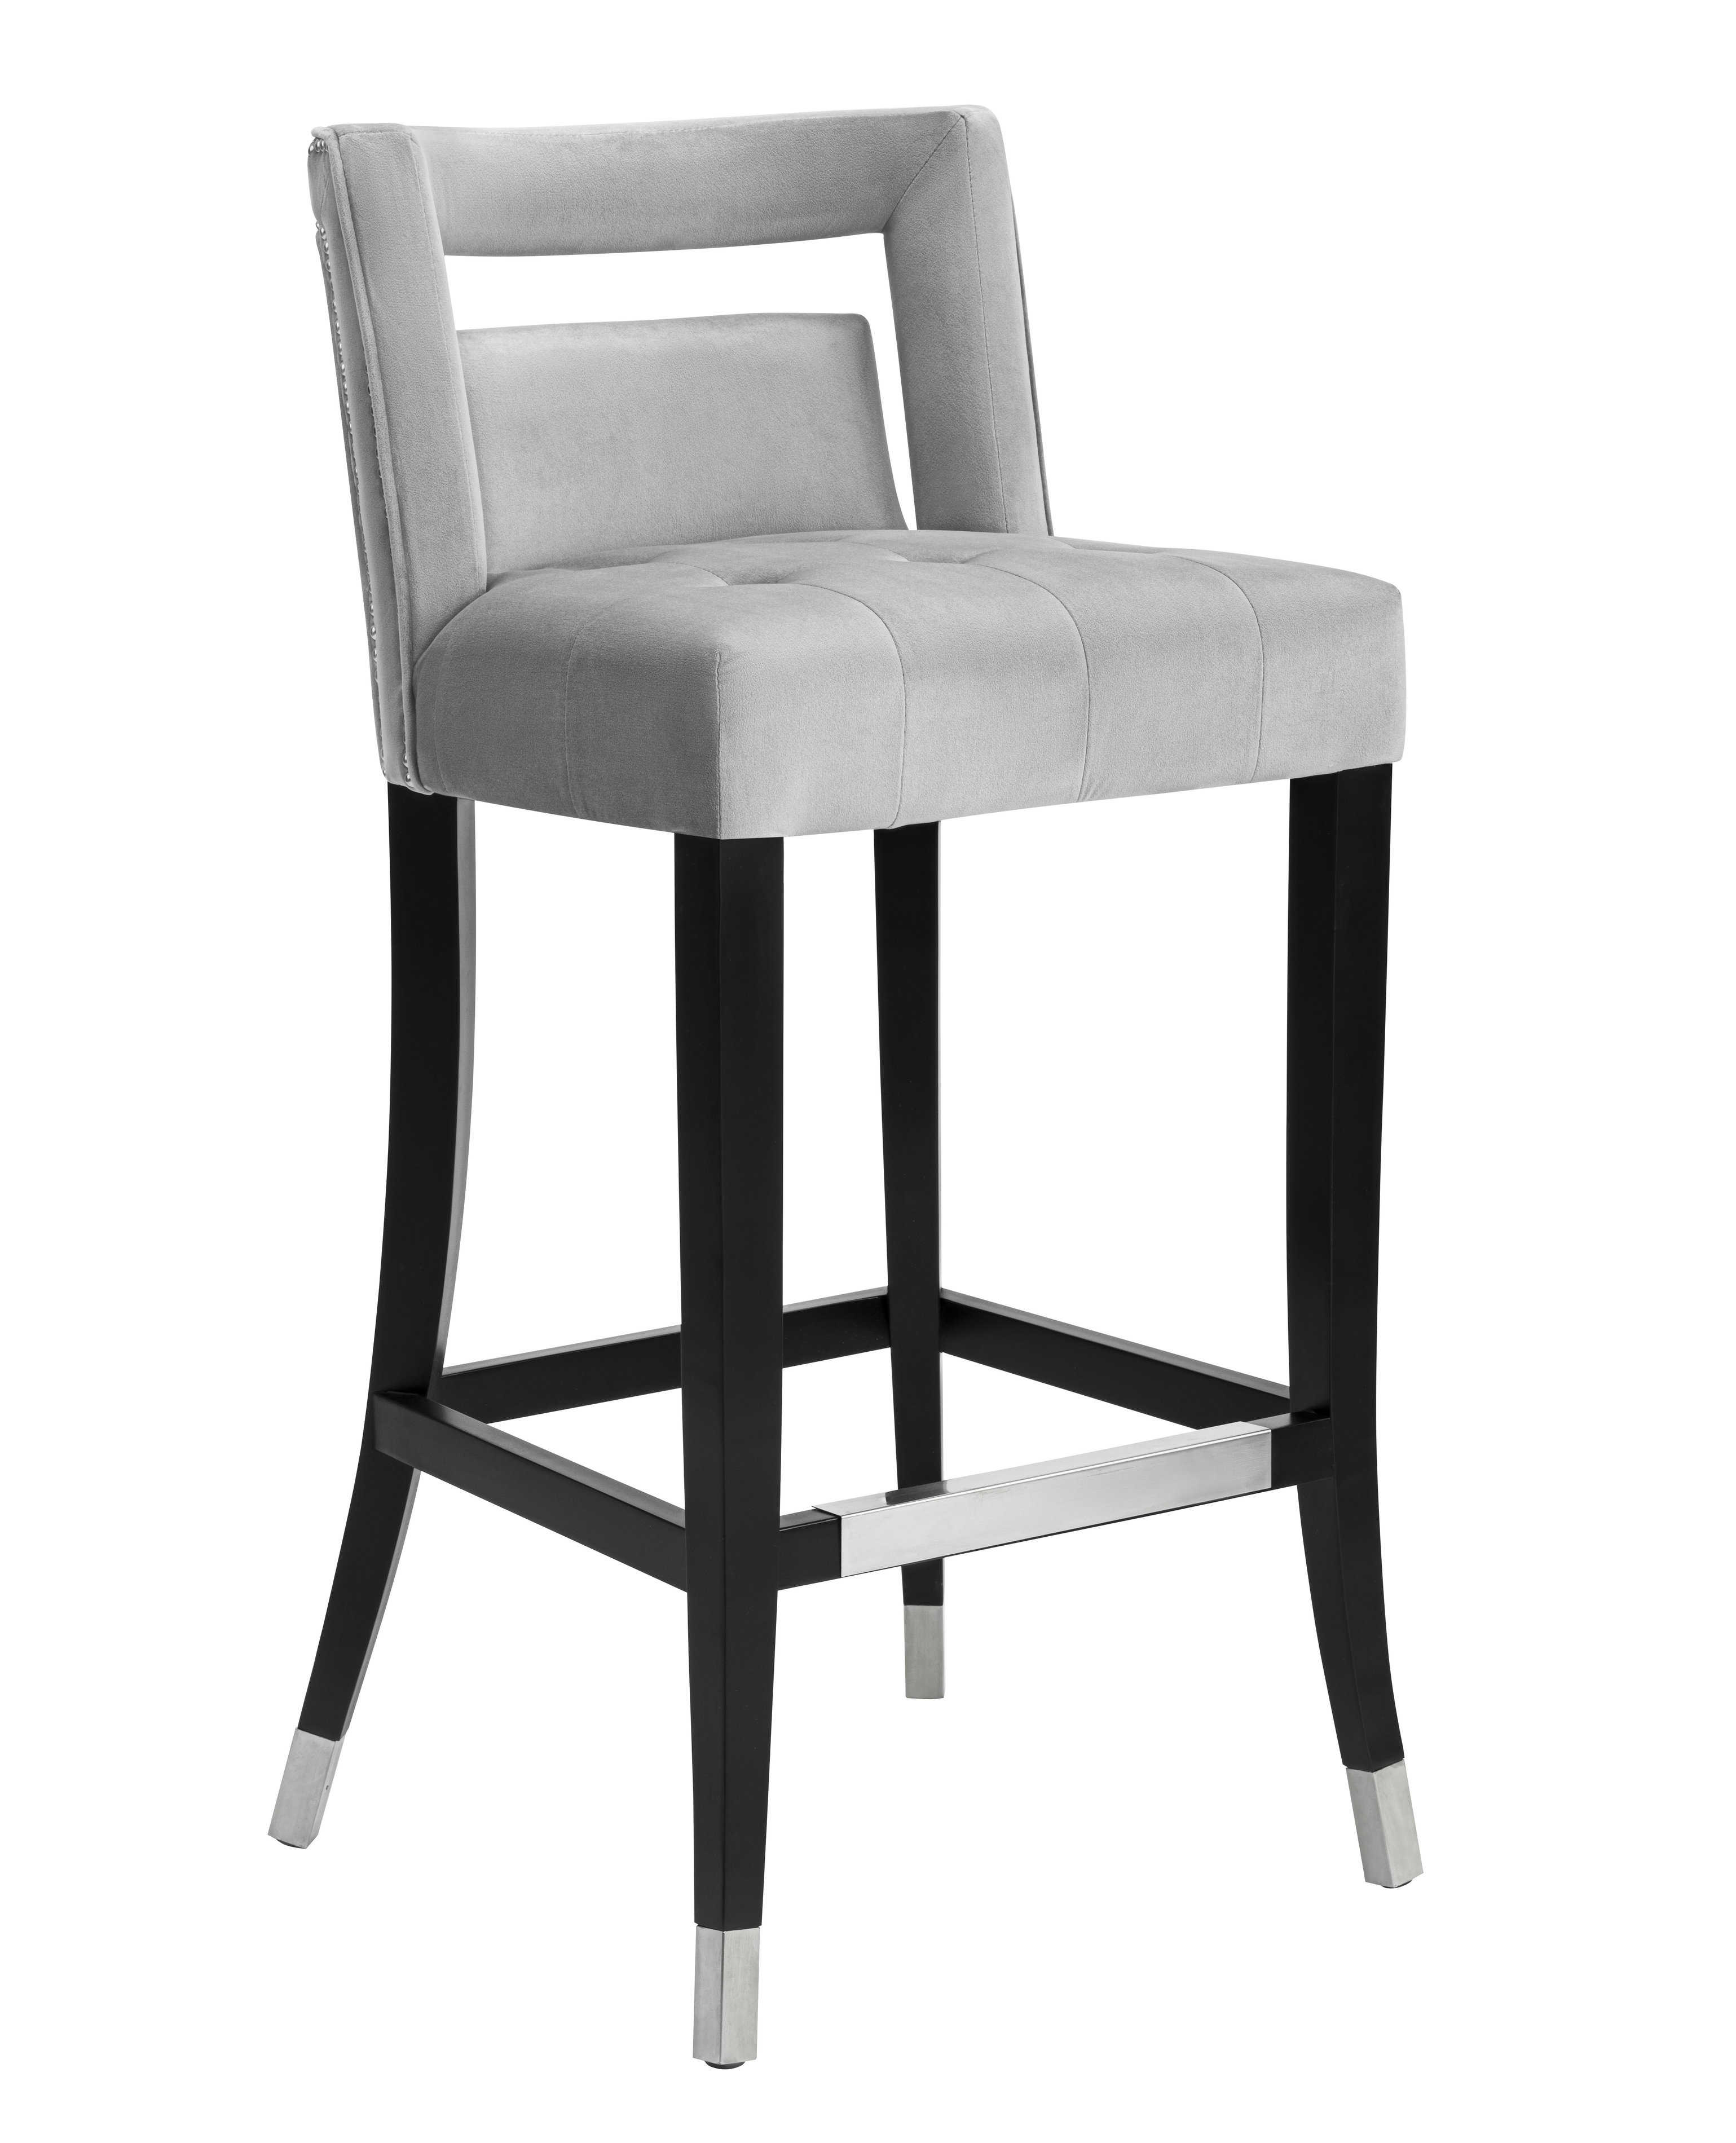 grey bar stools with backs